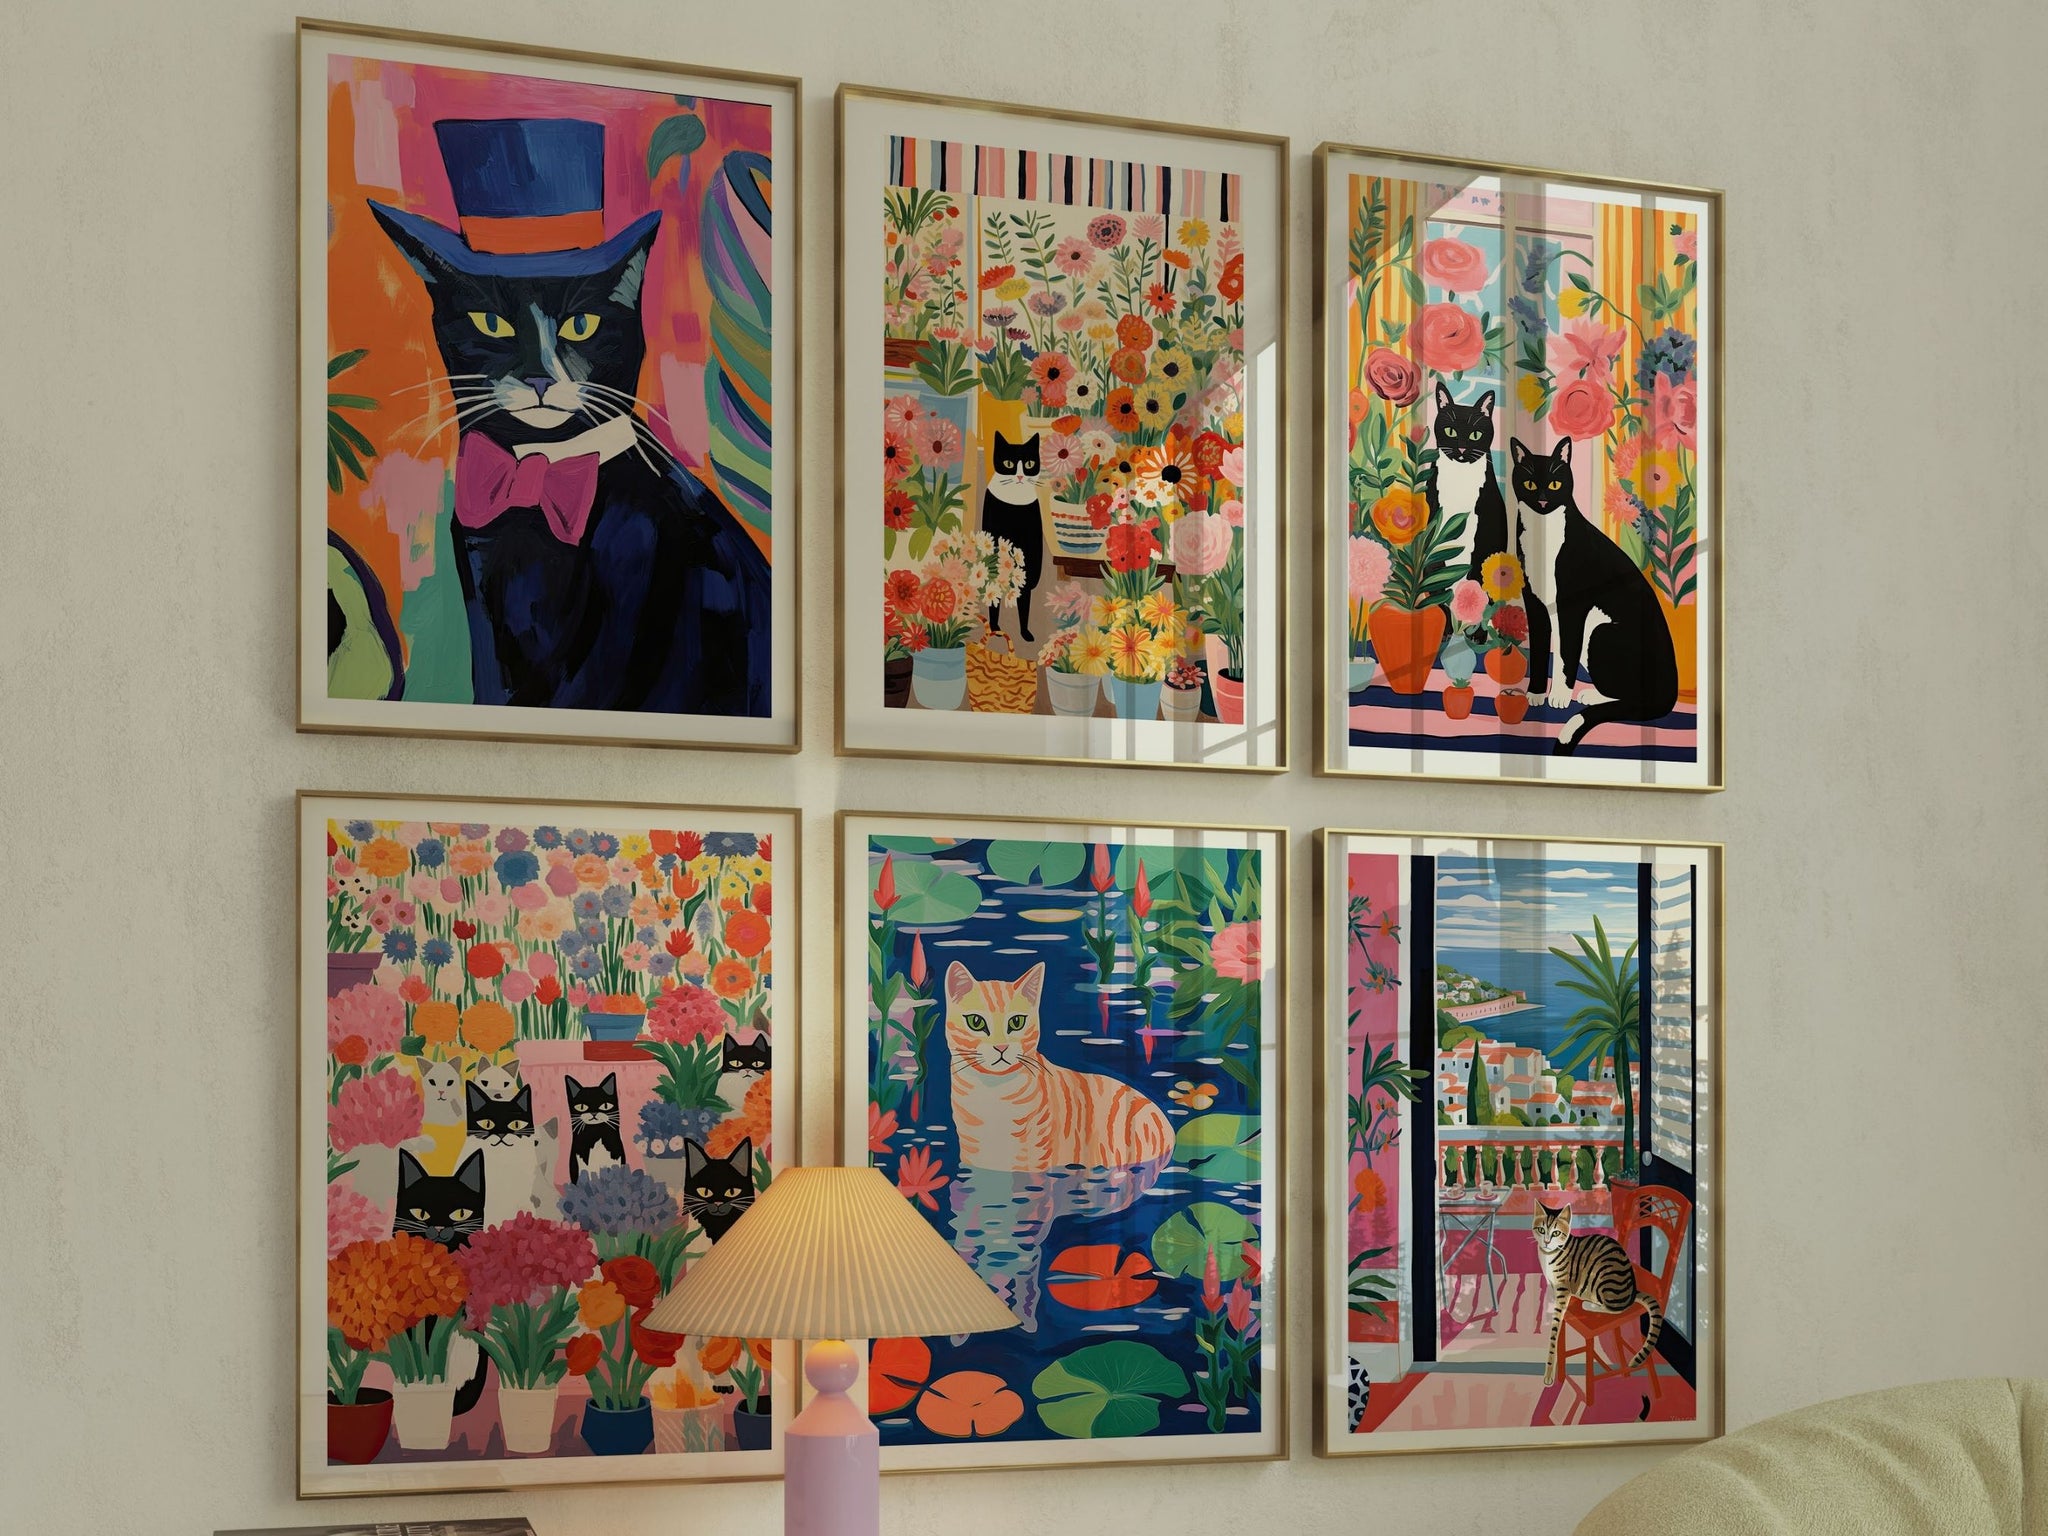 Balcony Cat, Garden Cat Print, Flowers Cat Poster, Brown Cat Art, Floral Print, Funny Cat print, Trendy wall Art, Pink Colorful Art, Spain